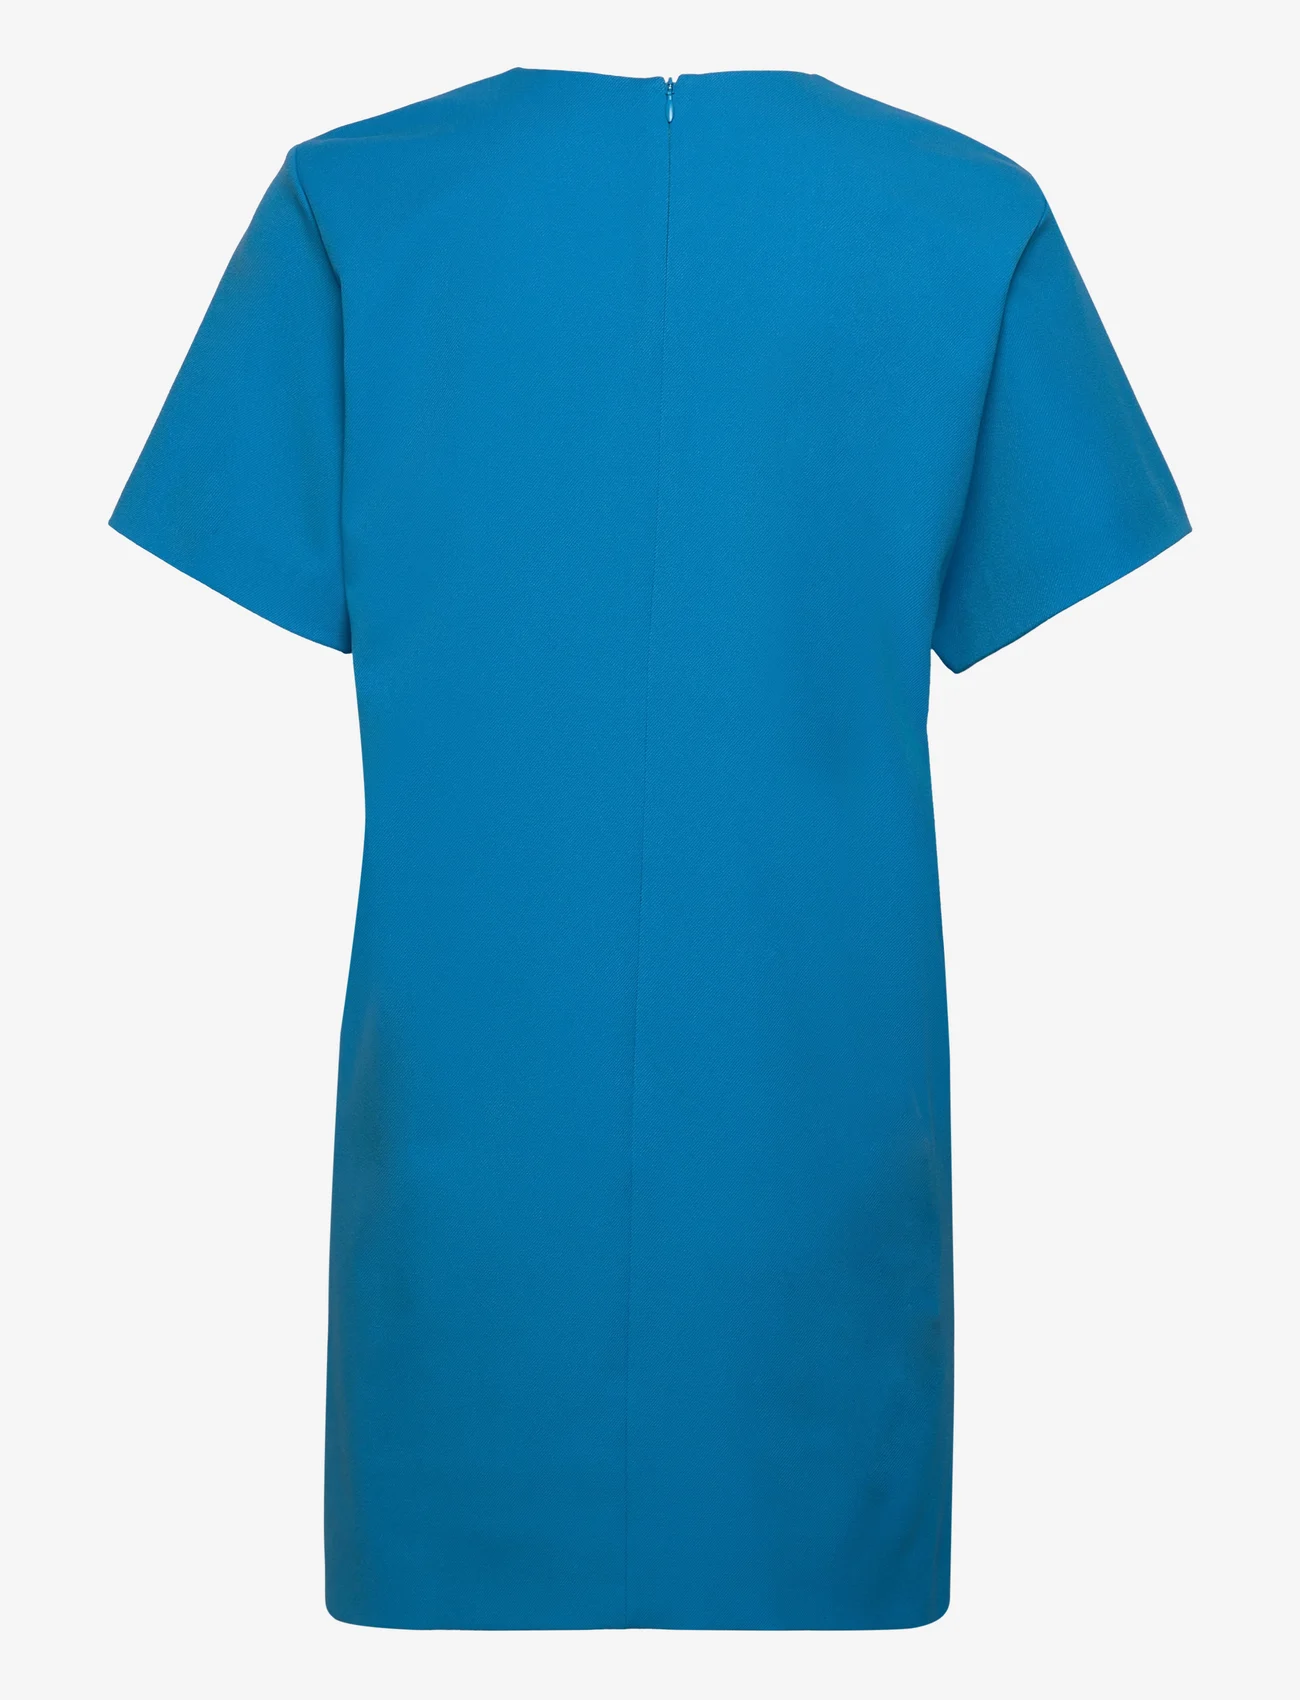 HUGO - Kulianna - t-shirtkjoler - bright blue - 1